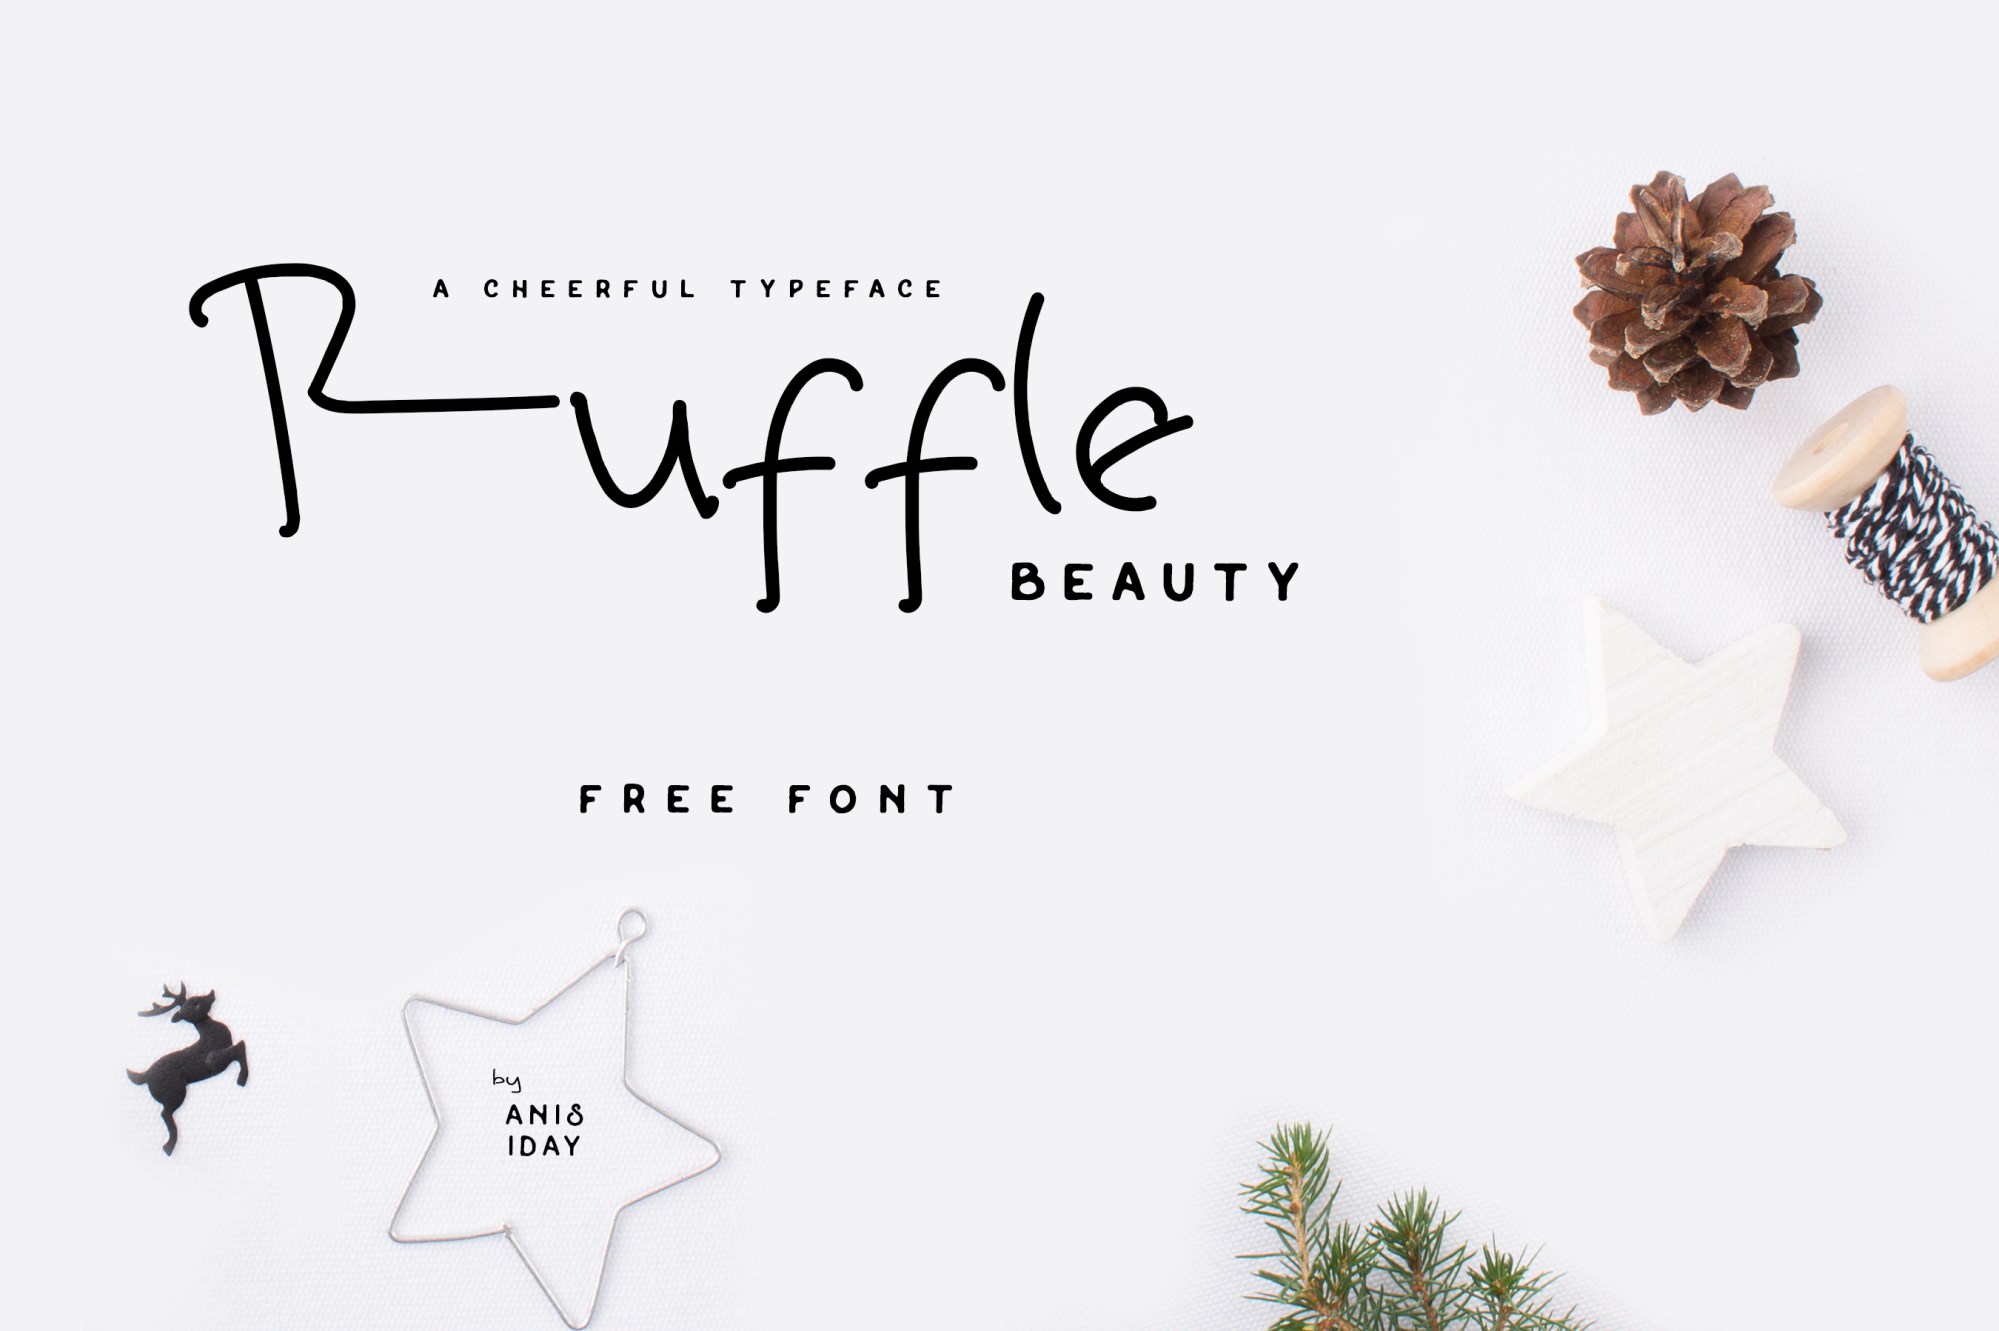 Ruffle Beauty Font